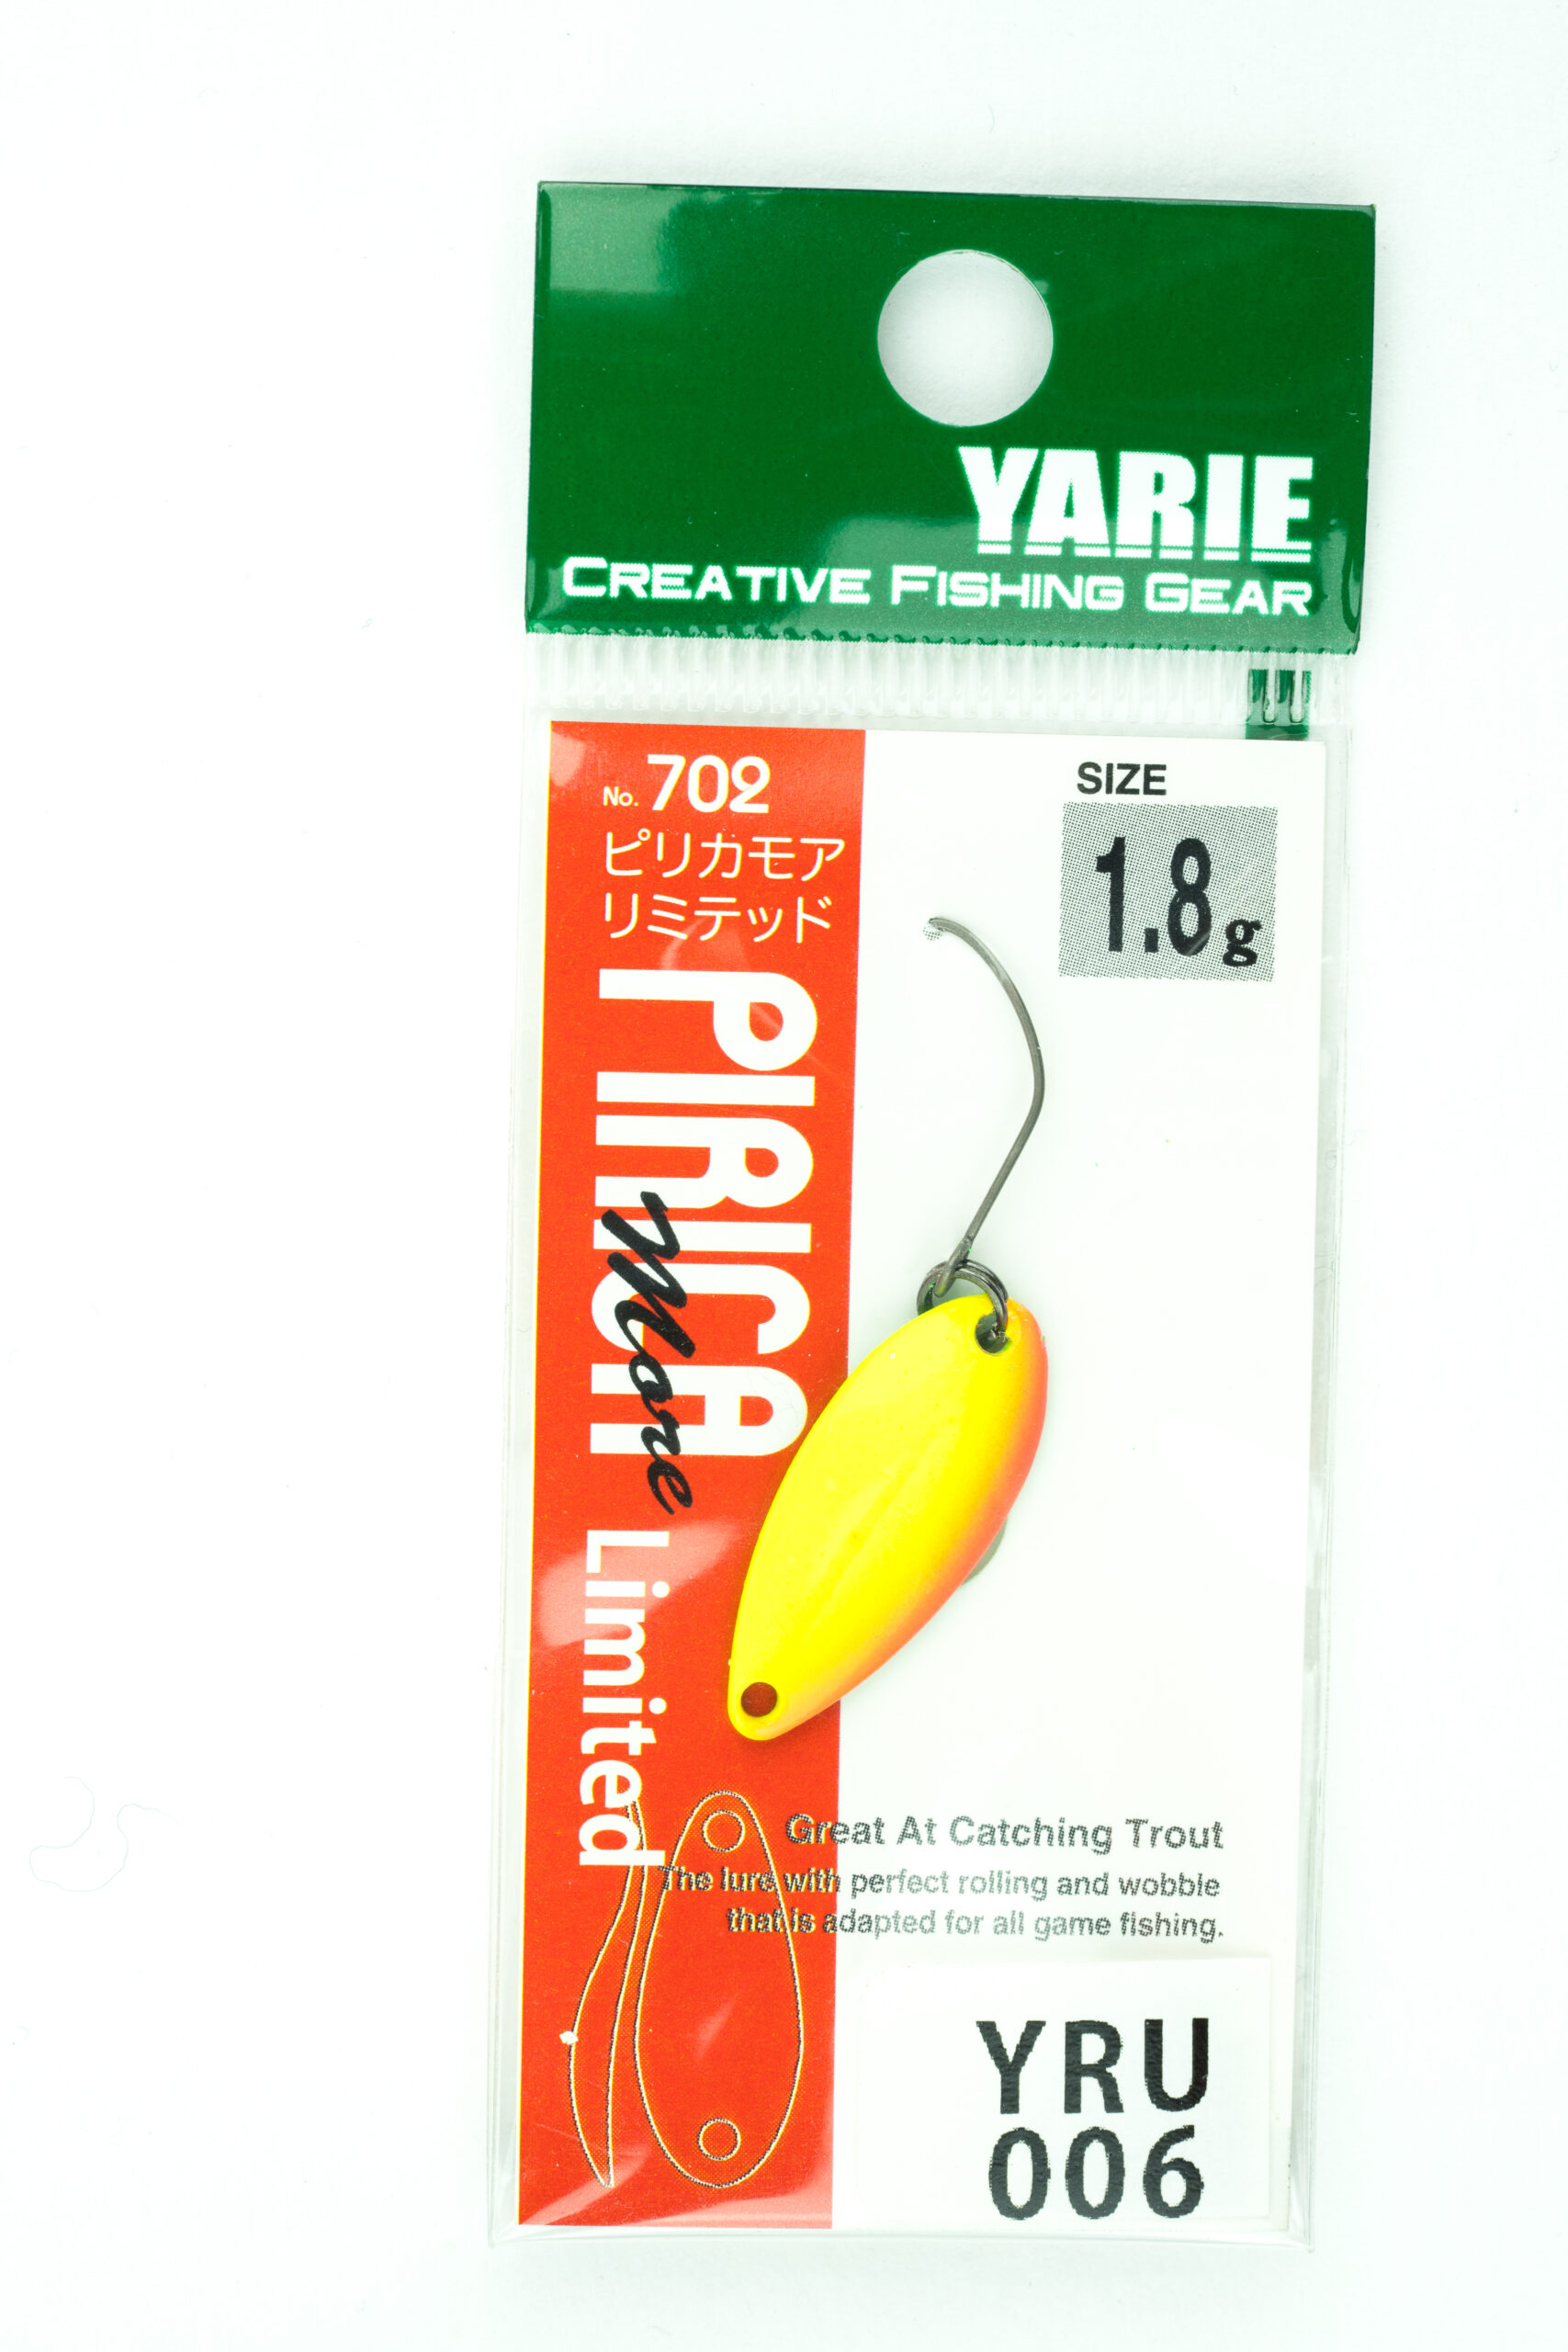 Yarie Pirica More Limited 1,8g YRU006